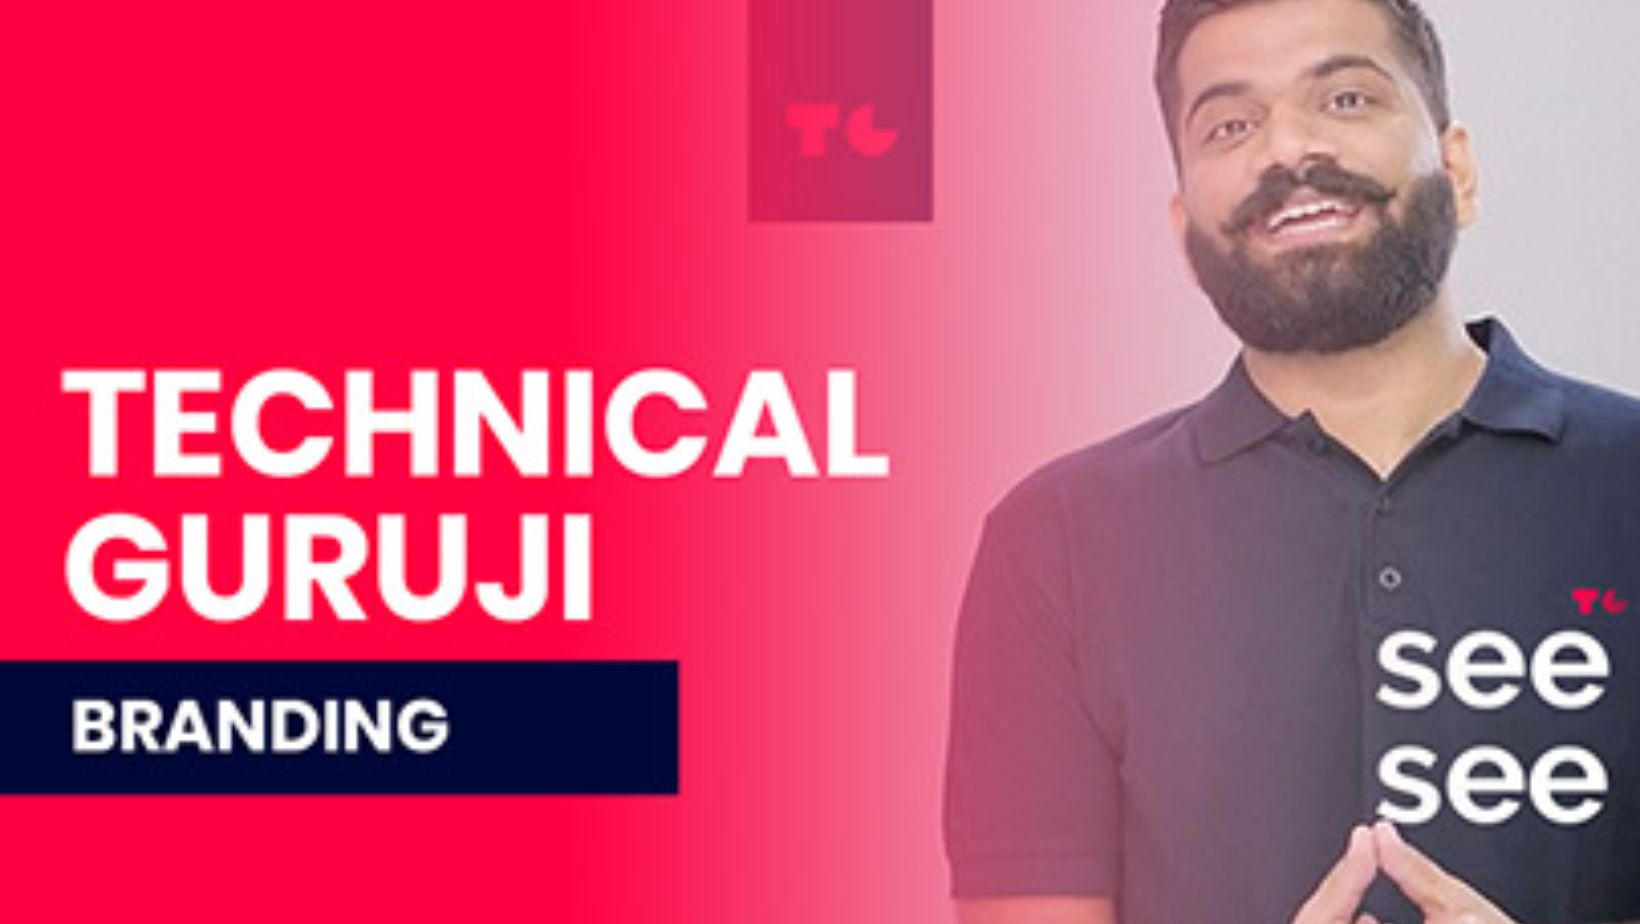 Technical Guruji Brand and Image